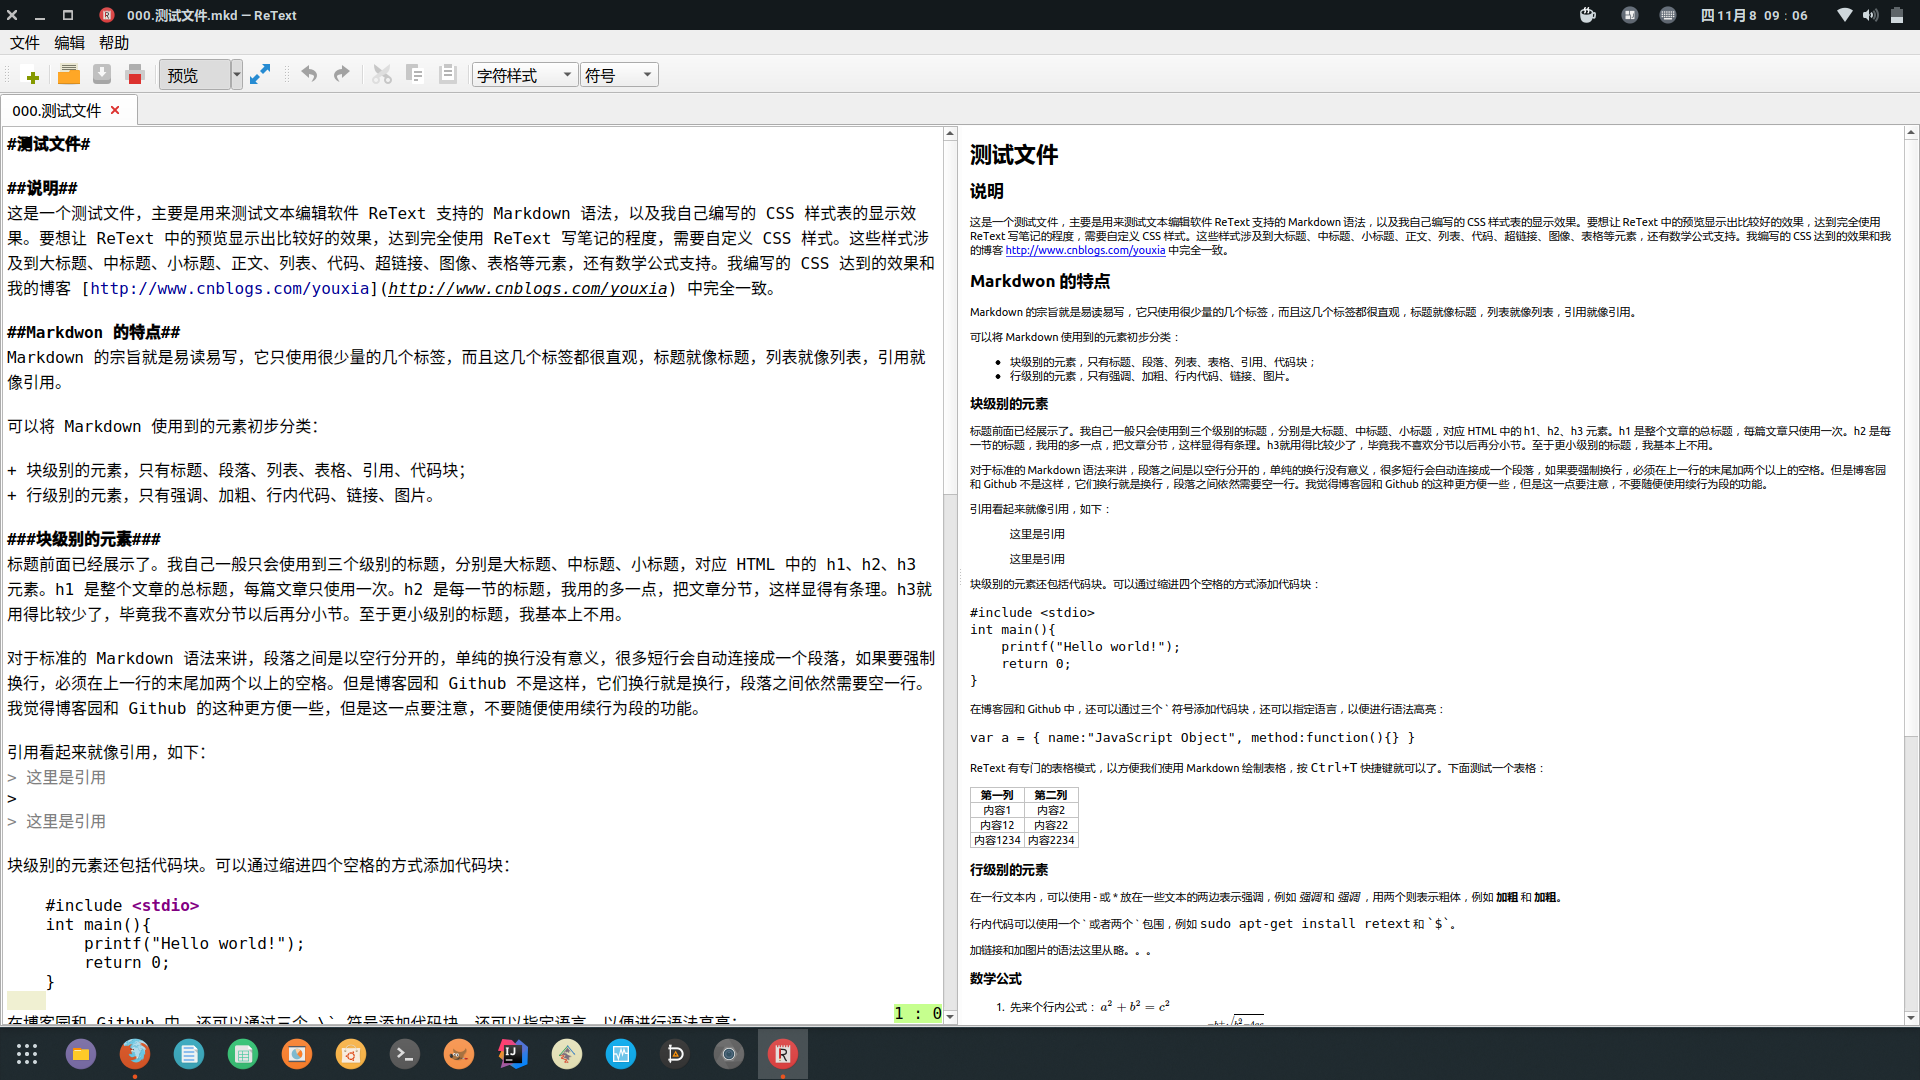 Linux 桌面玩家指南 12 优秀的文本化编辑思想大碰撞 Markdown Latex Mathjax 京山游侠 博客园